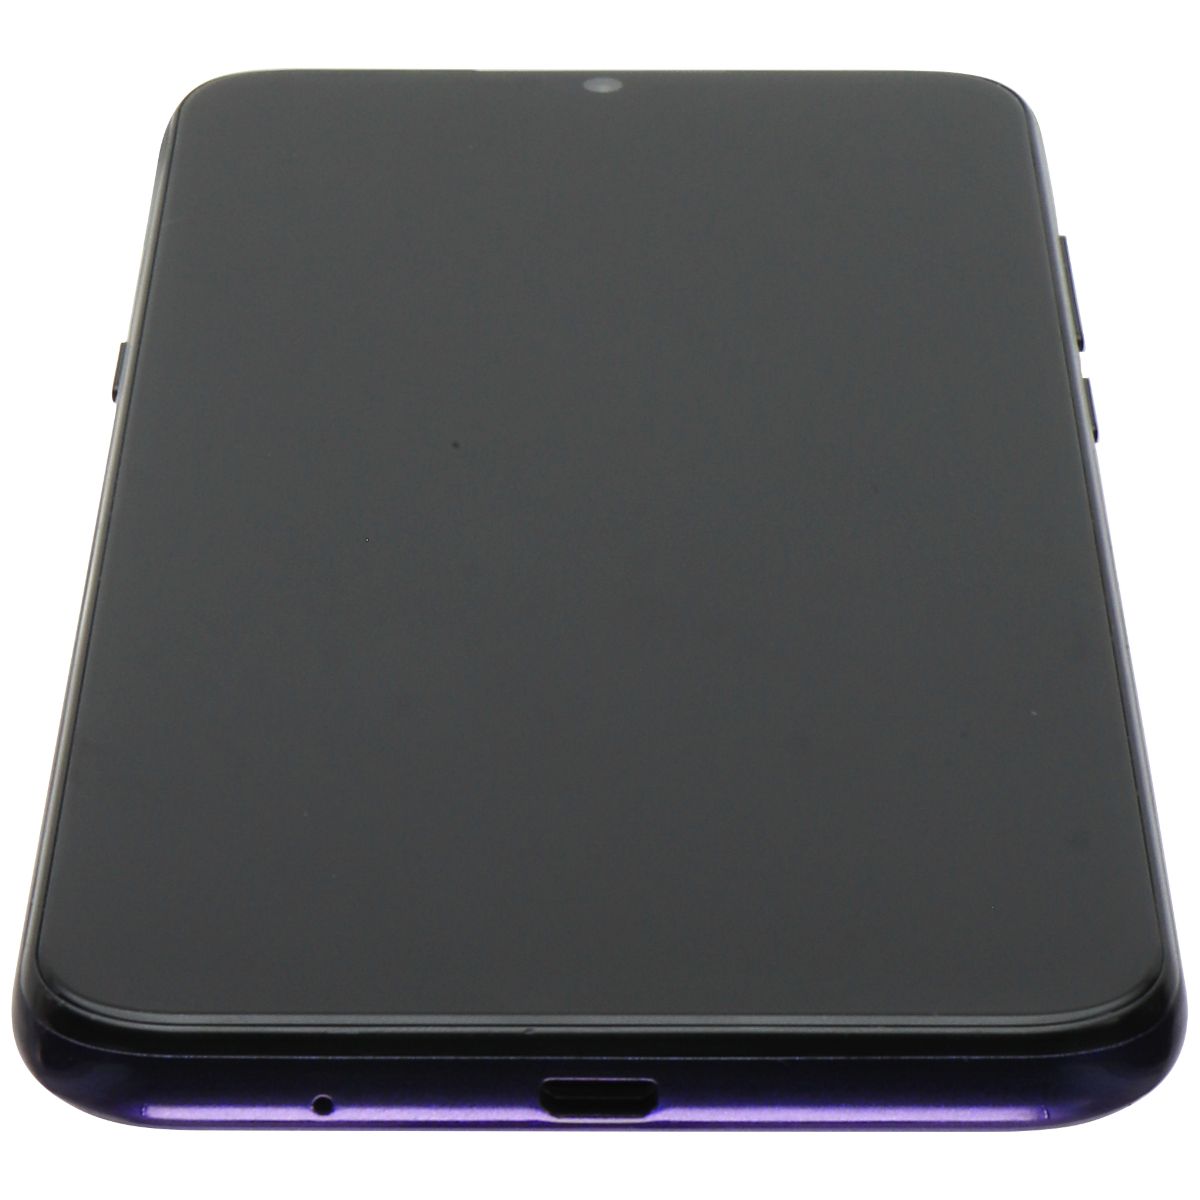 BLU G61 (V81) 6.5-inch Smartphone (Unlocked) - 64GB/Black Cell Phones & Smartphones BLU    - Simple Cell Bulk Wholesale Pricing - USA Seller